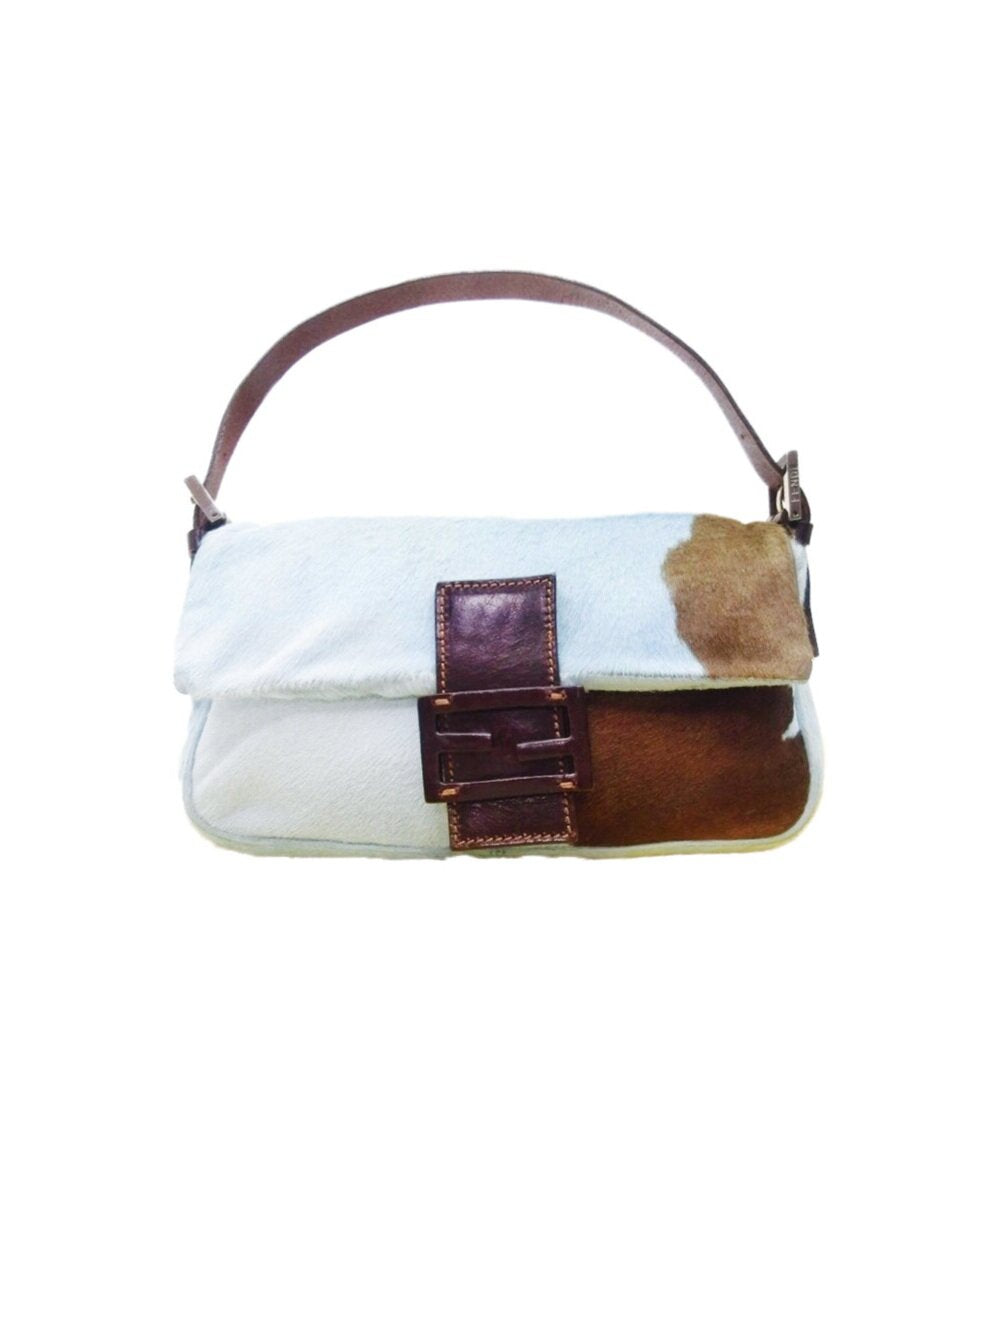 Vintage Fendi Flap Baguette Handbag ca. 2000